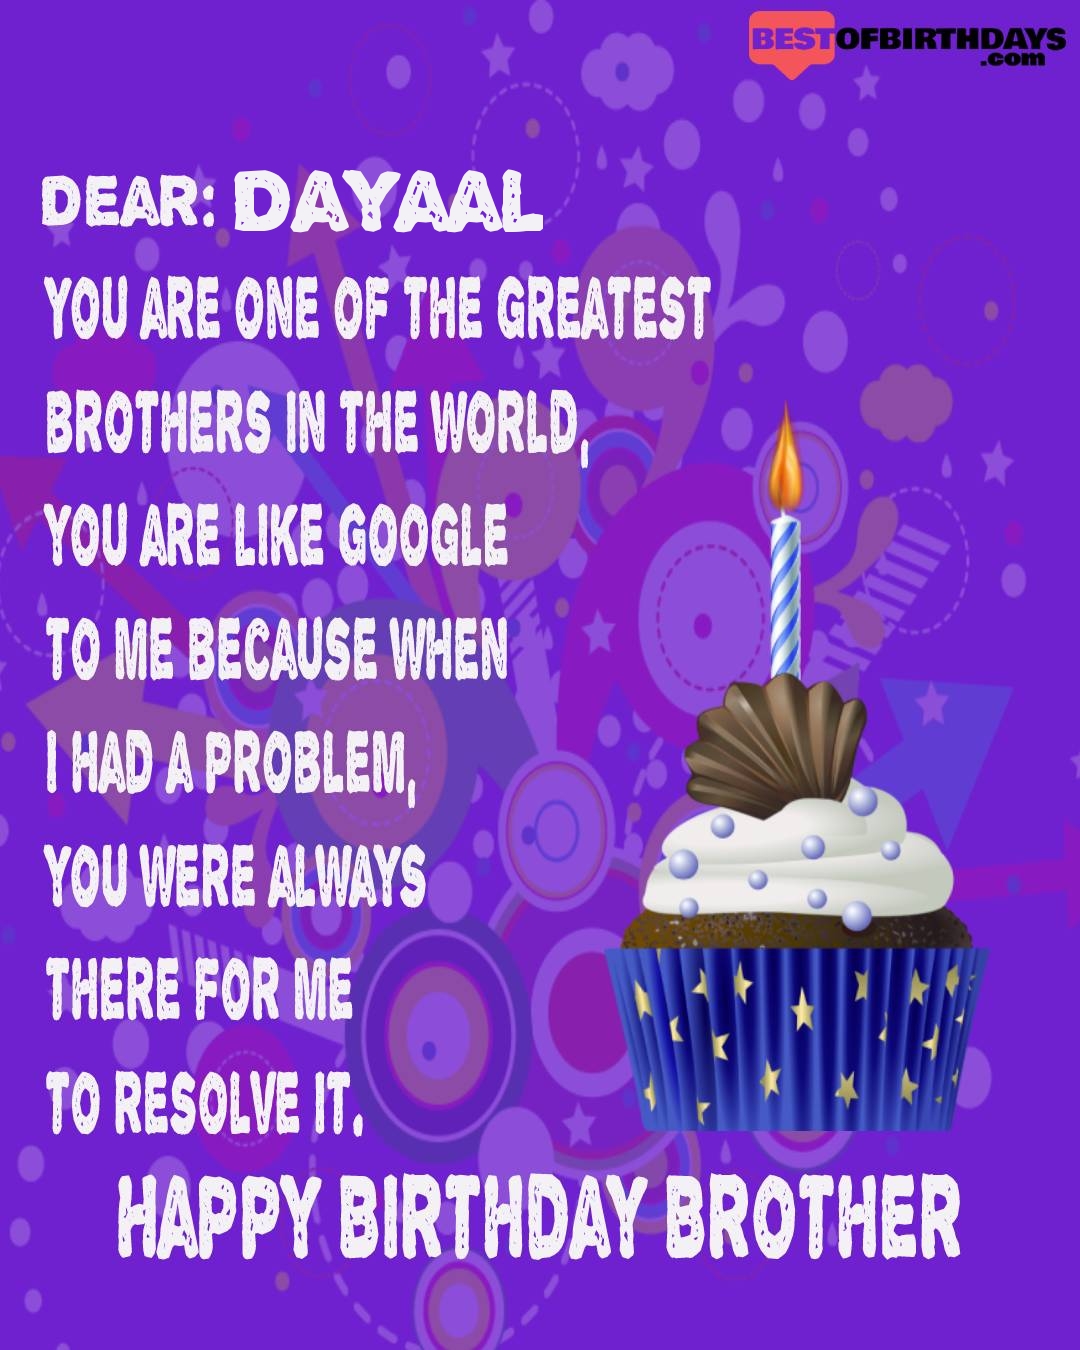 Happy birthday dayaal bhai brother bro